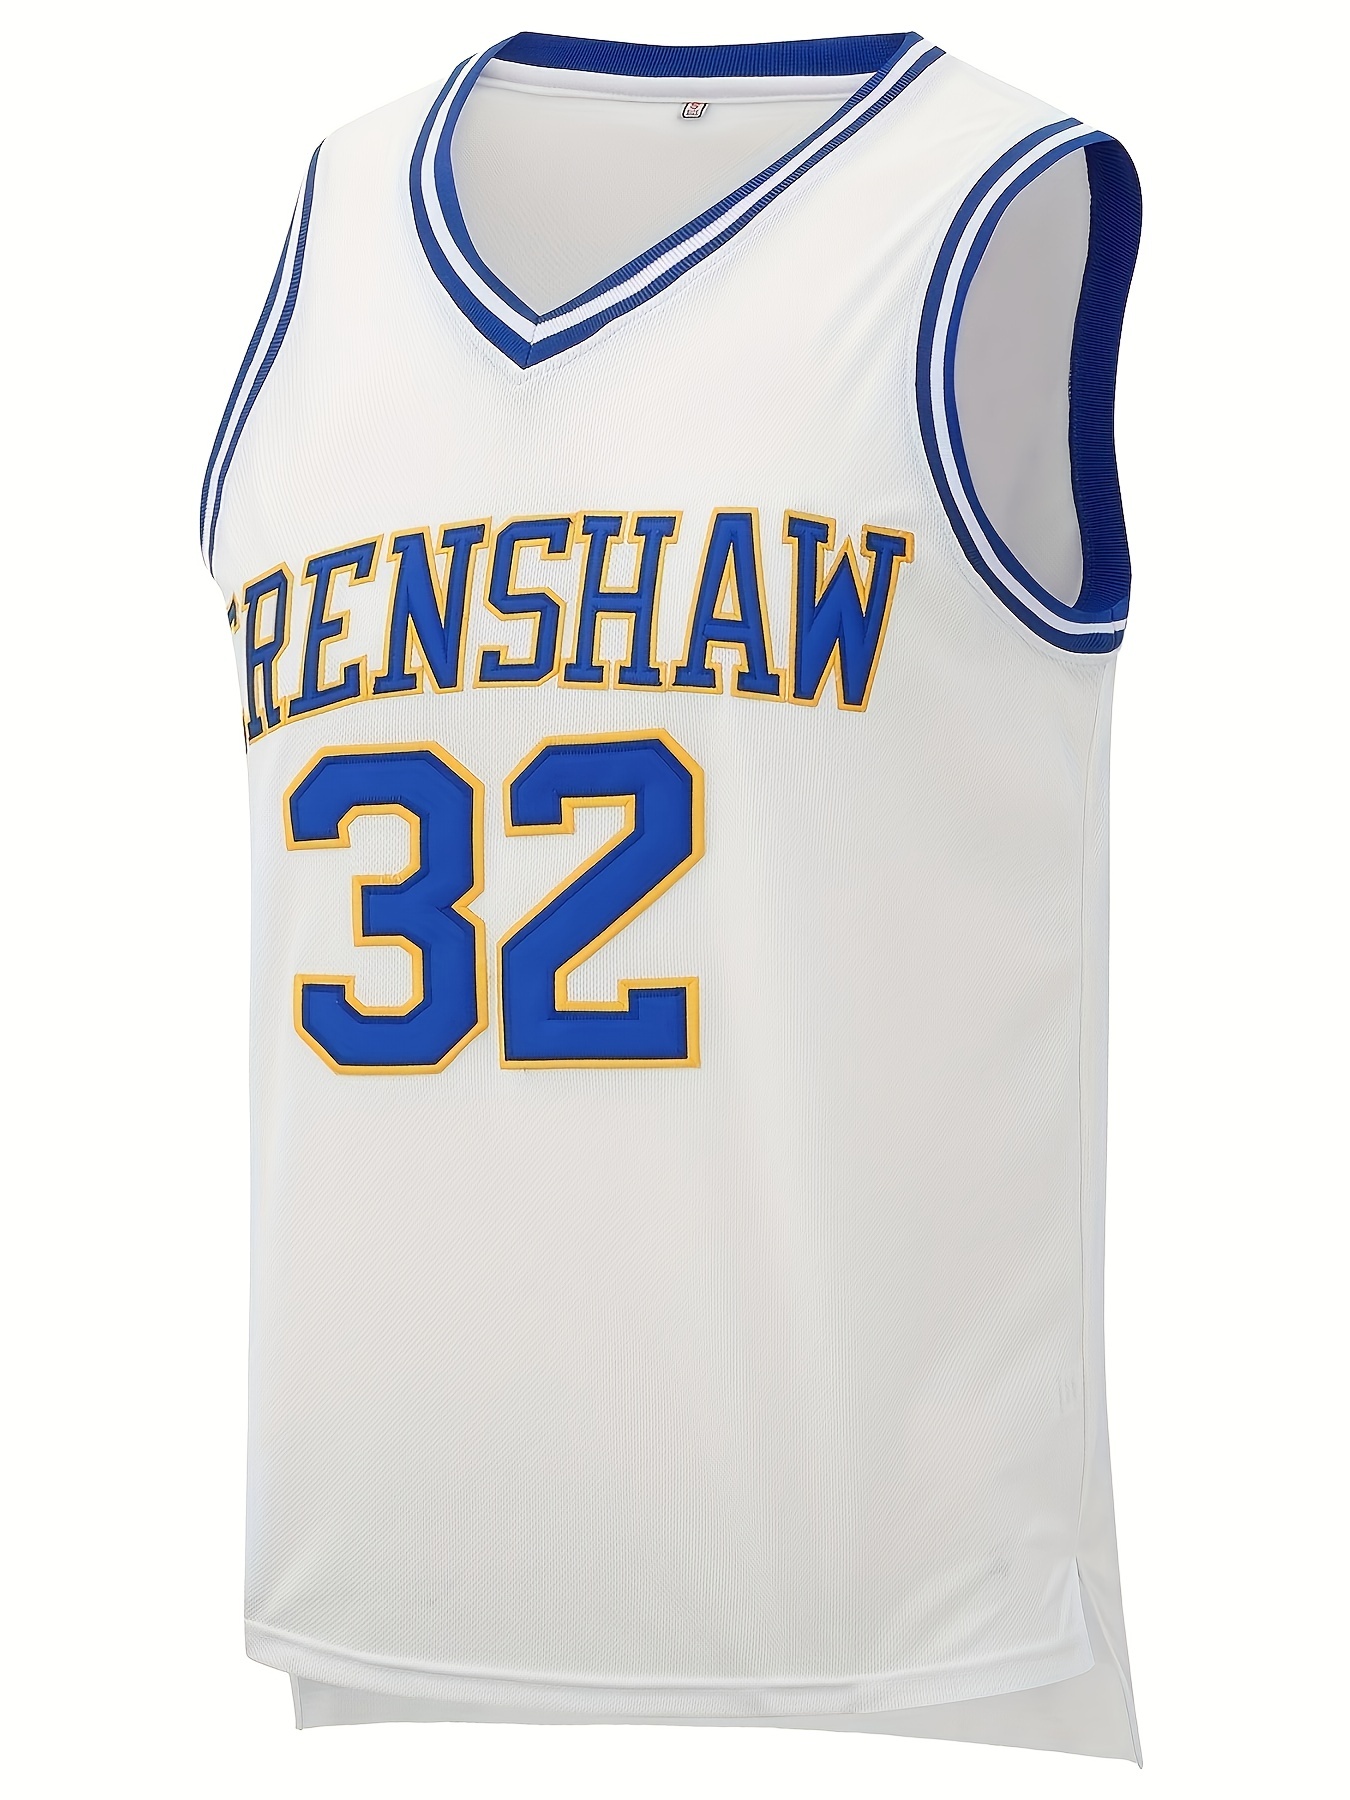 Crenshaw #32 High School Love And Basketball Jersey, Retro